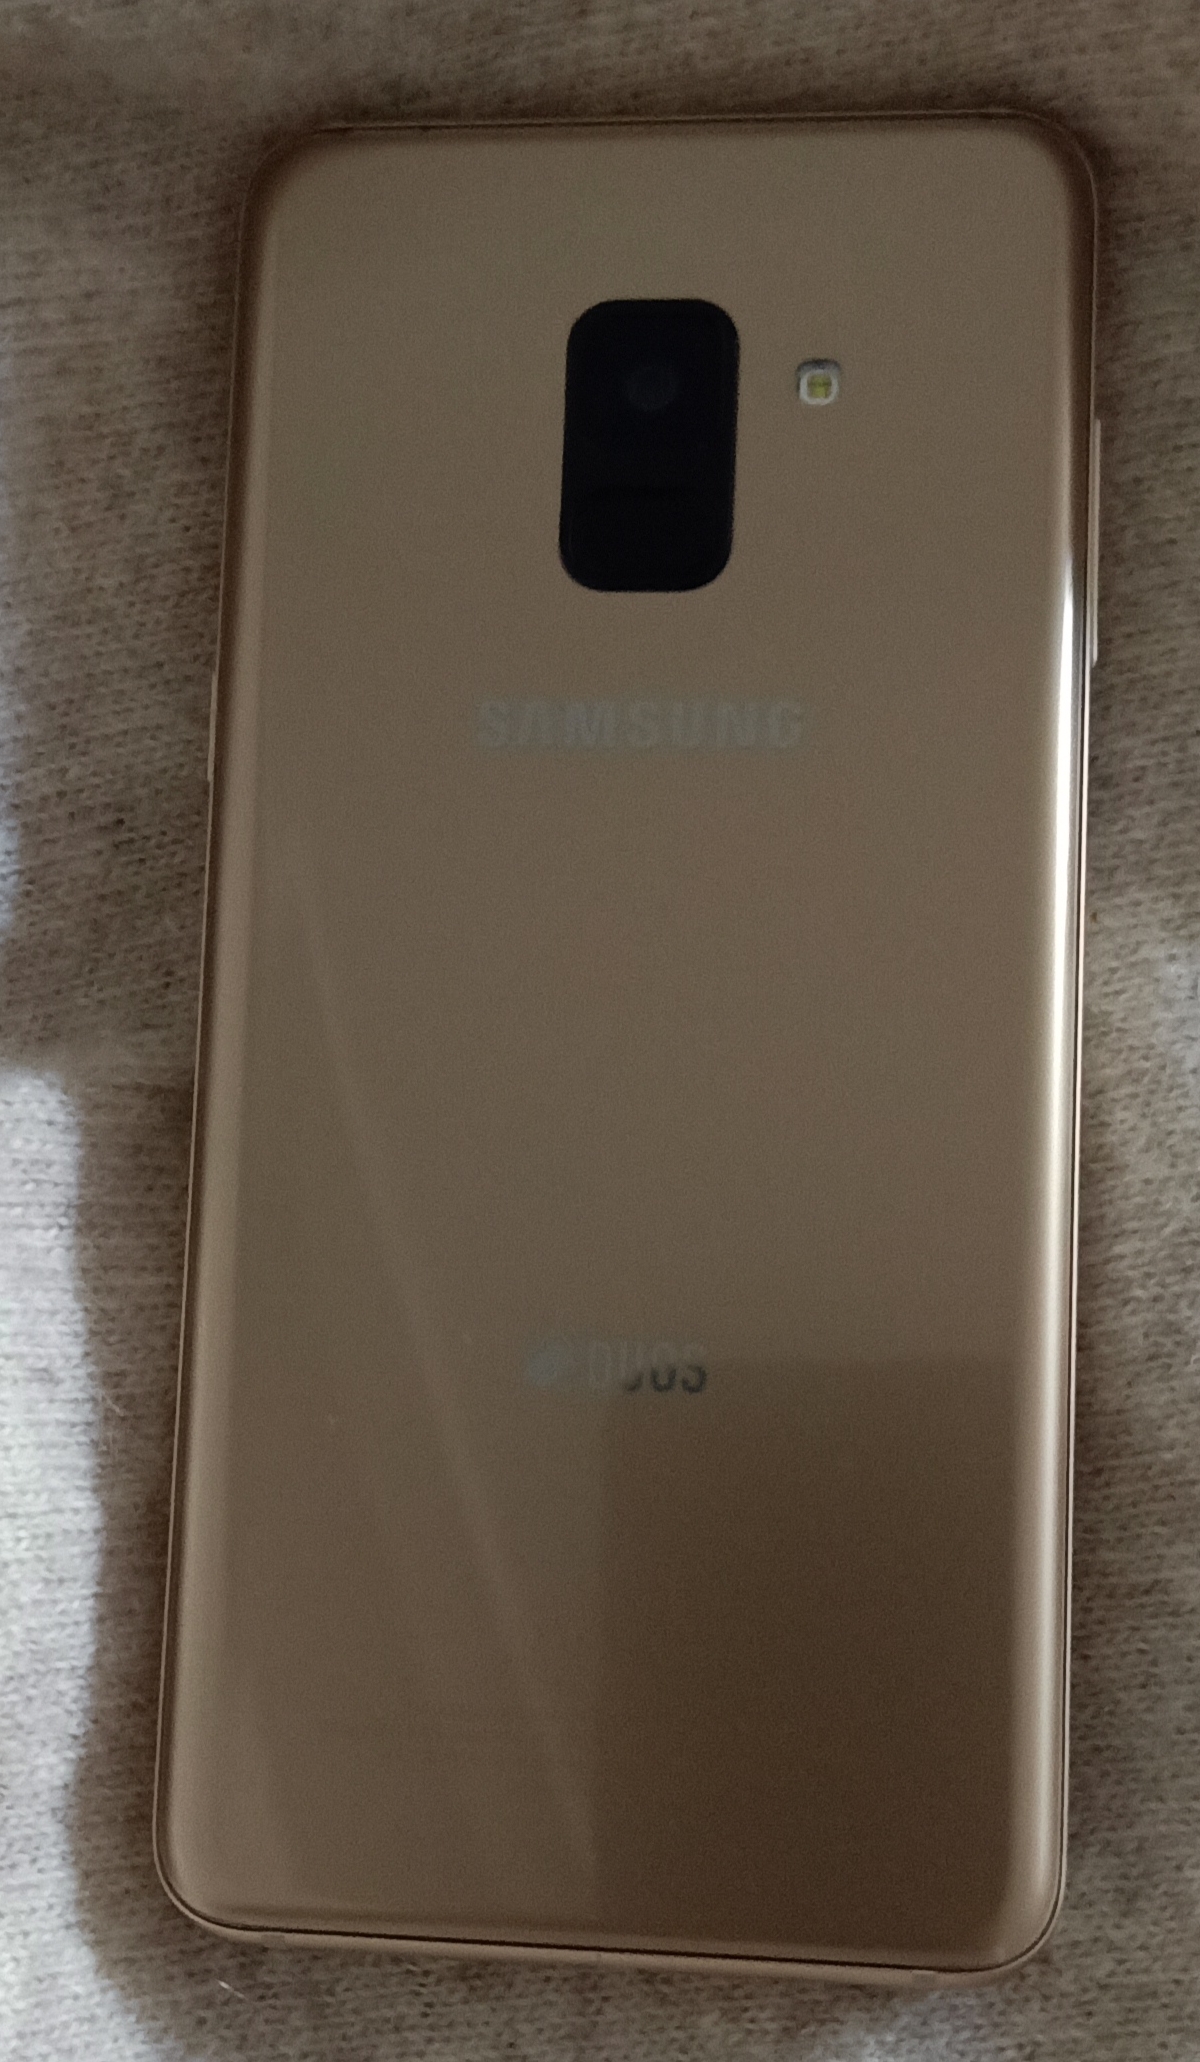 Samsung A8